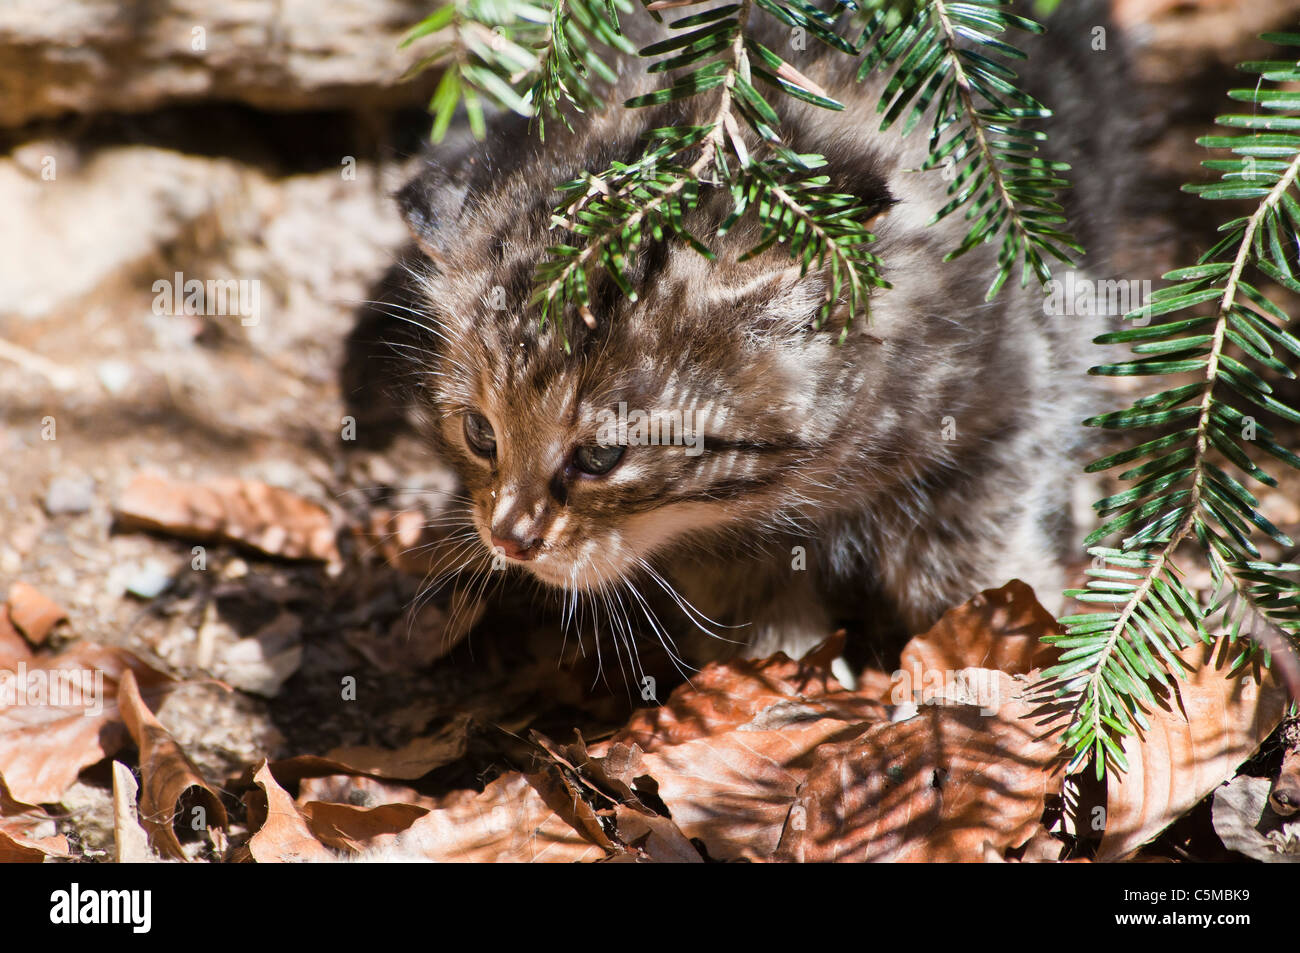 Young european wildcat, Felis silvestris, exploring the environment Stock Photo